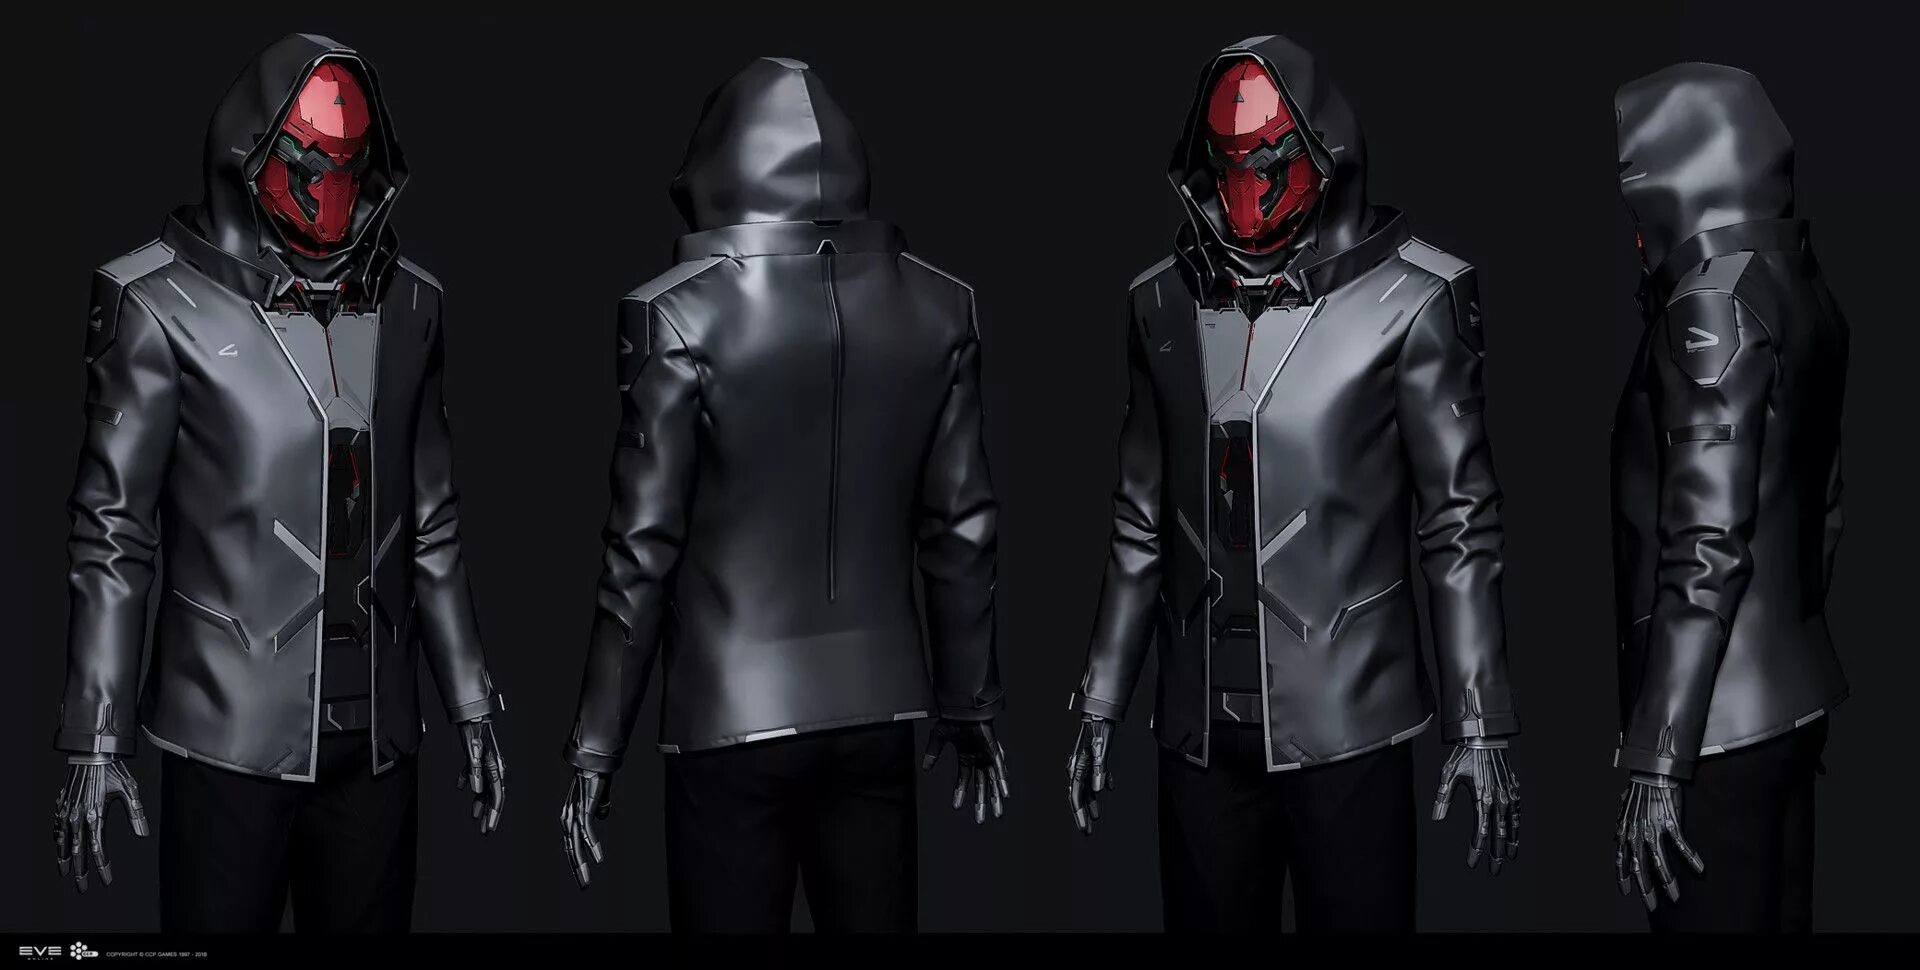 Mask suit. Cyberpunk броня мужская плащ. Триглавиан Eve броня одежда. Одежда Cyberpunk мужская Art.